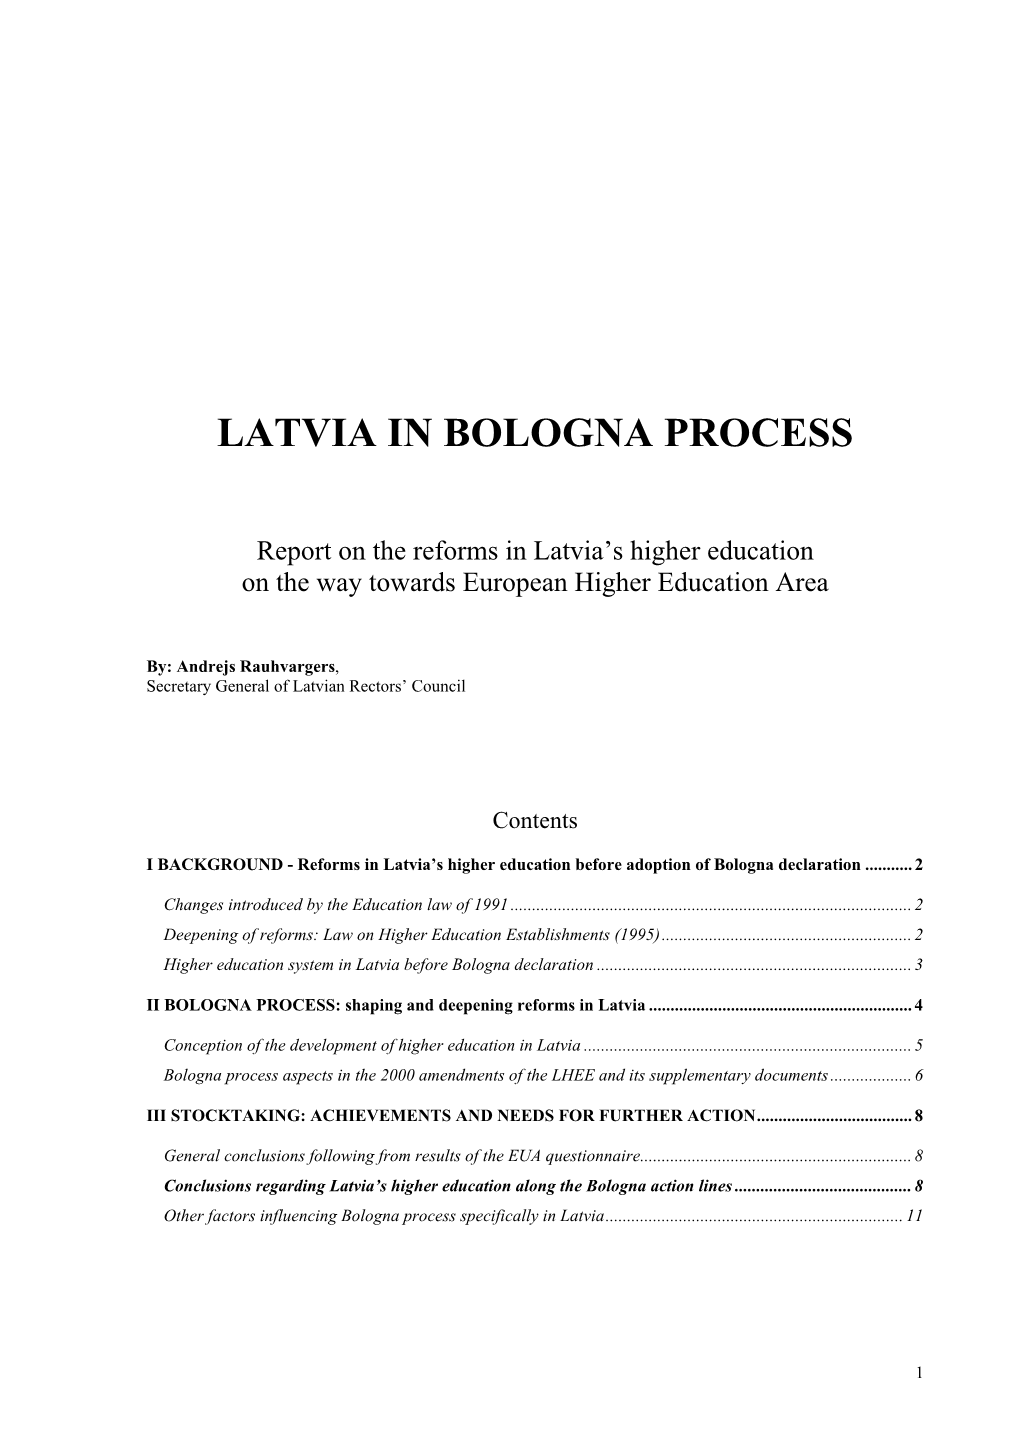 Latvia in Bologna Process